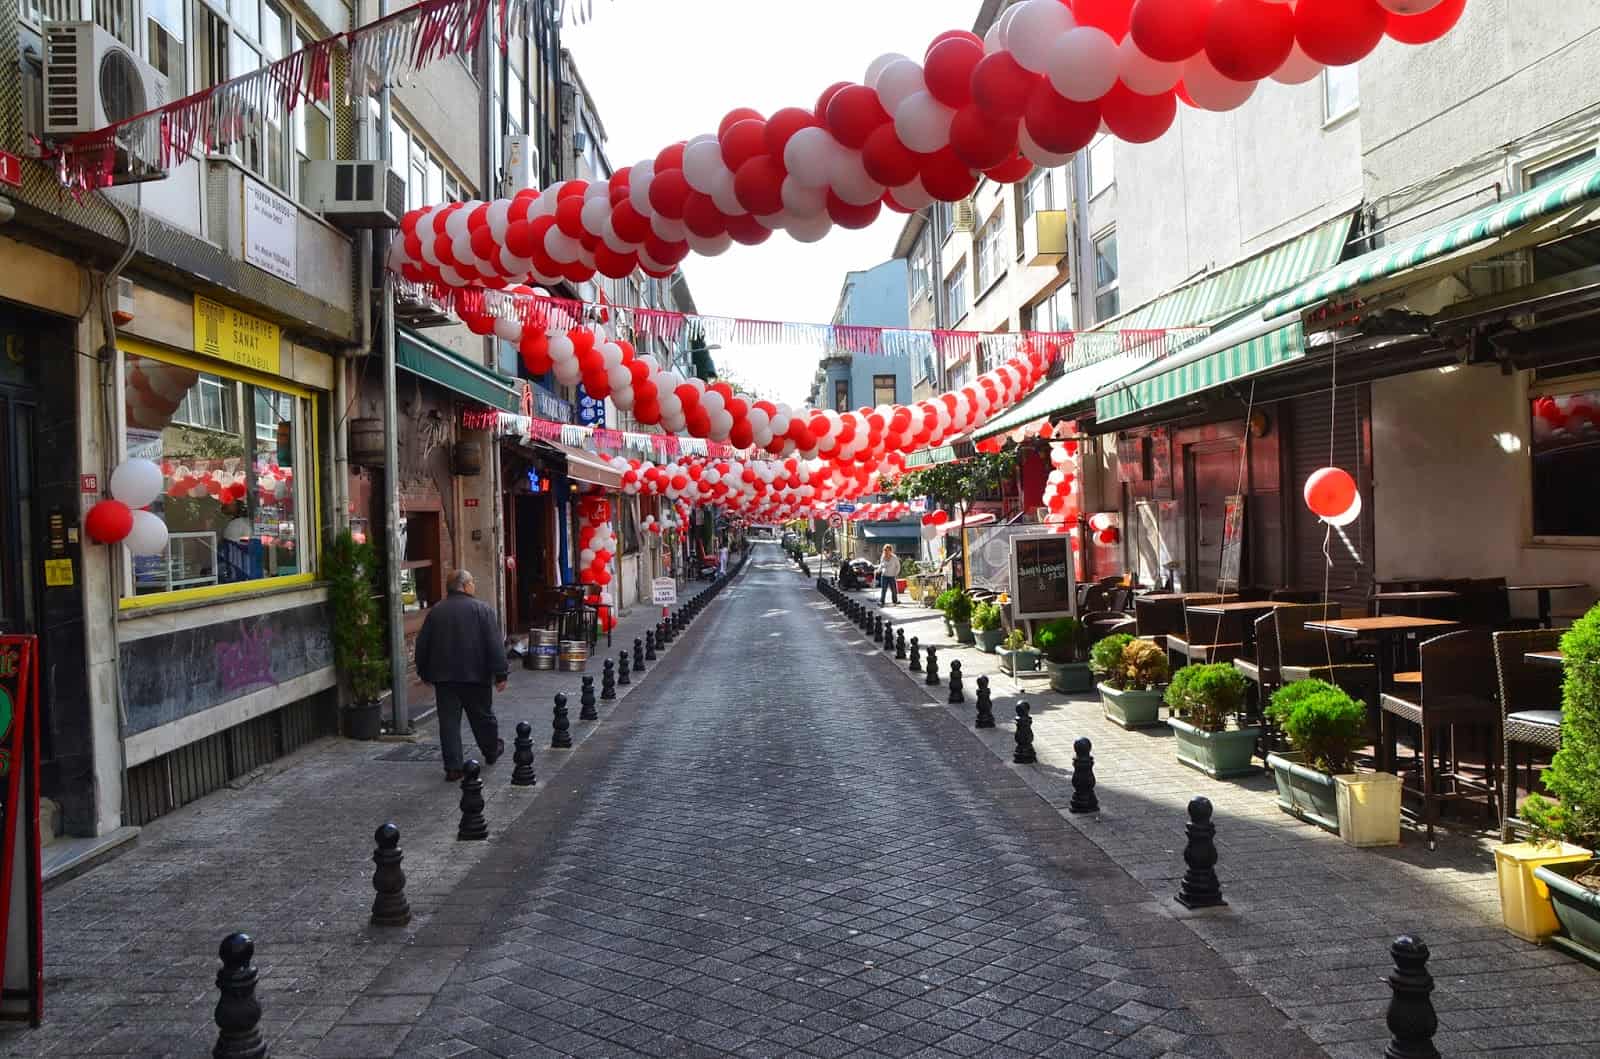 Kadife Street in Moda, Kadıköy, Istanbul, Turkey